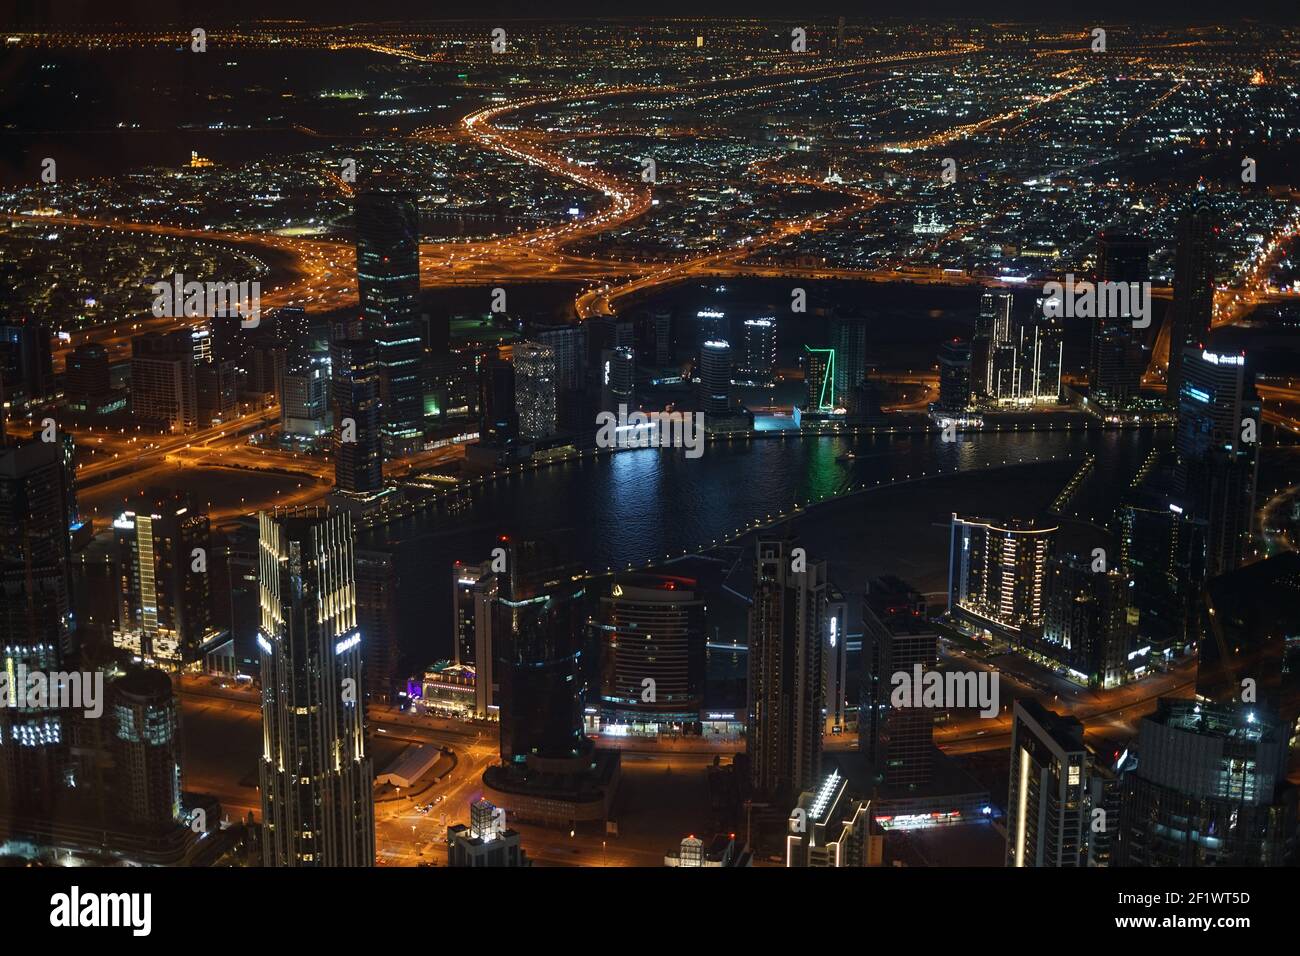 Dubai night view seen from the observation deck of Burj Khalifa Stock Photo